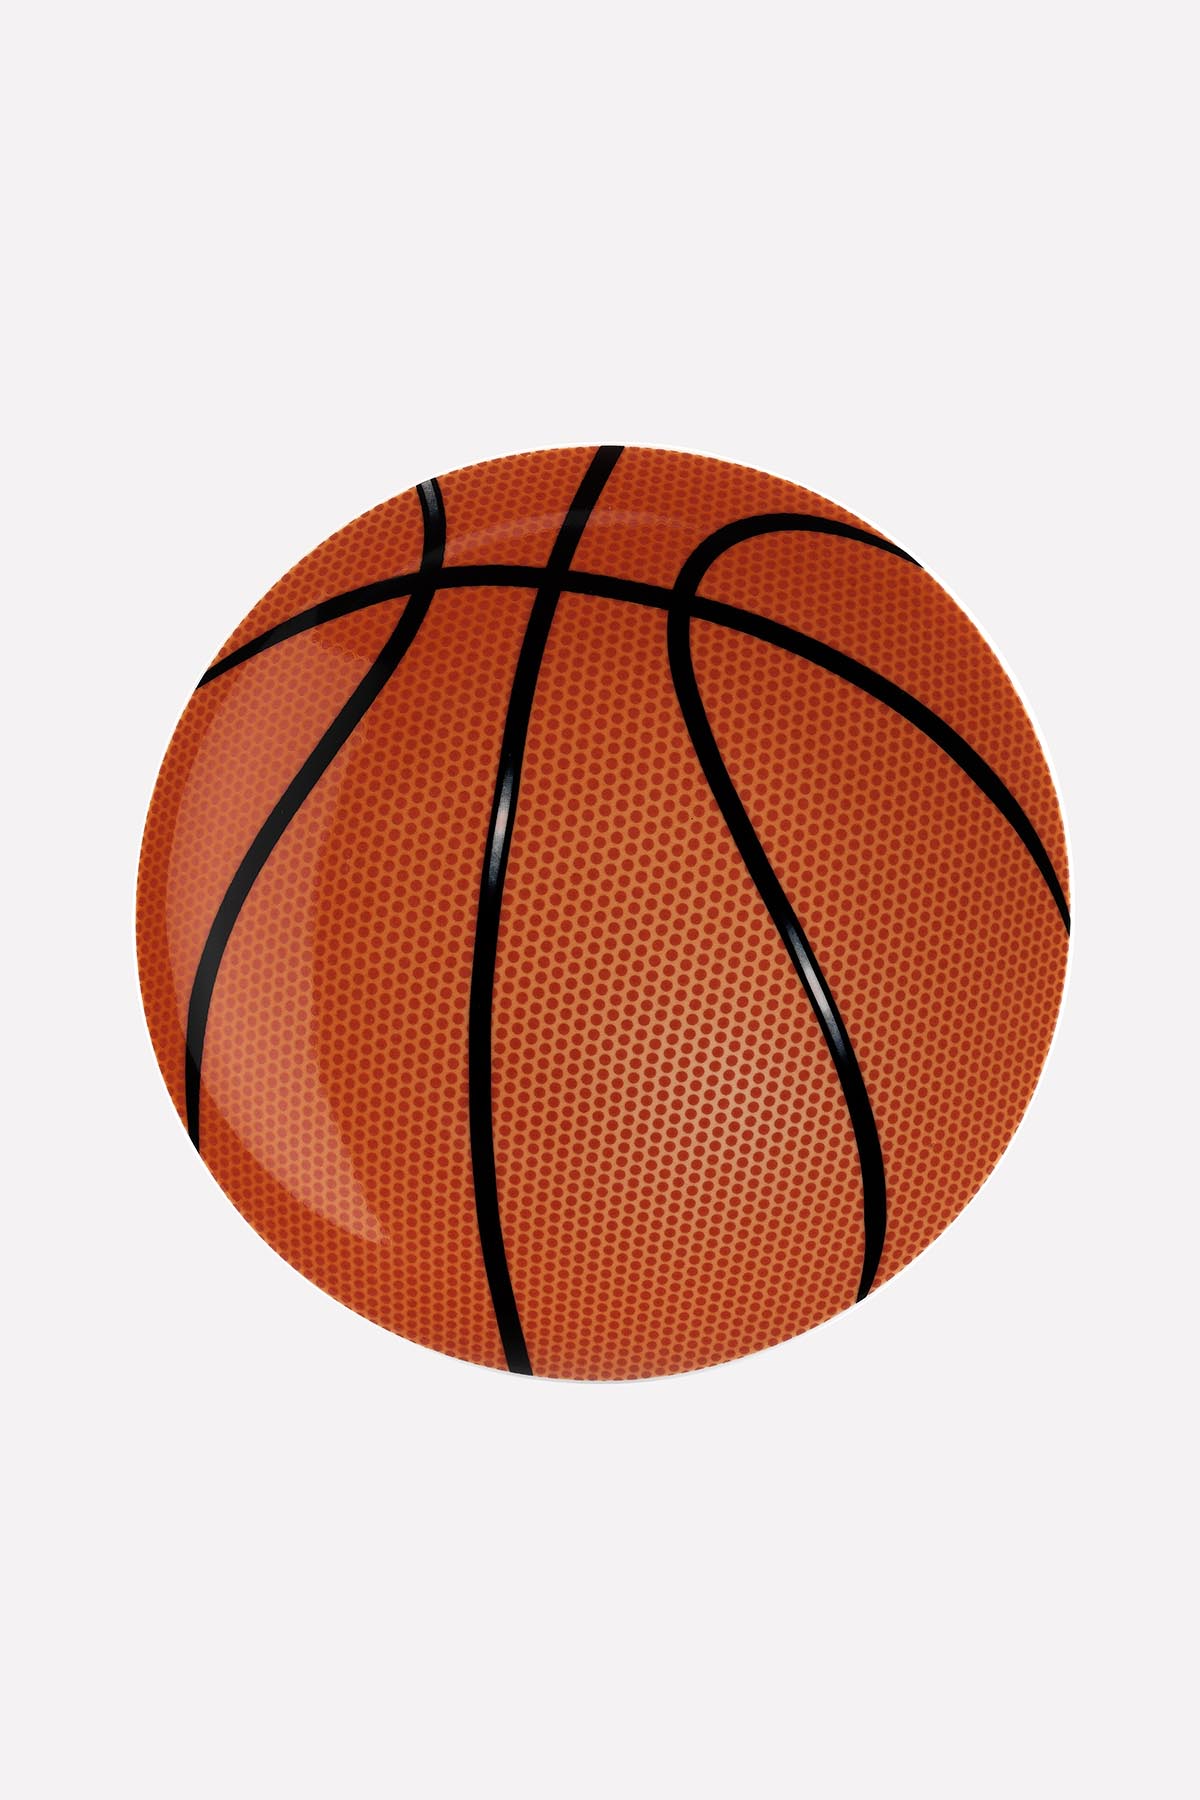 Kütahya Porselen 3 Parça Team Game Basketball Yemek Seti - 4